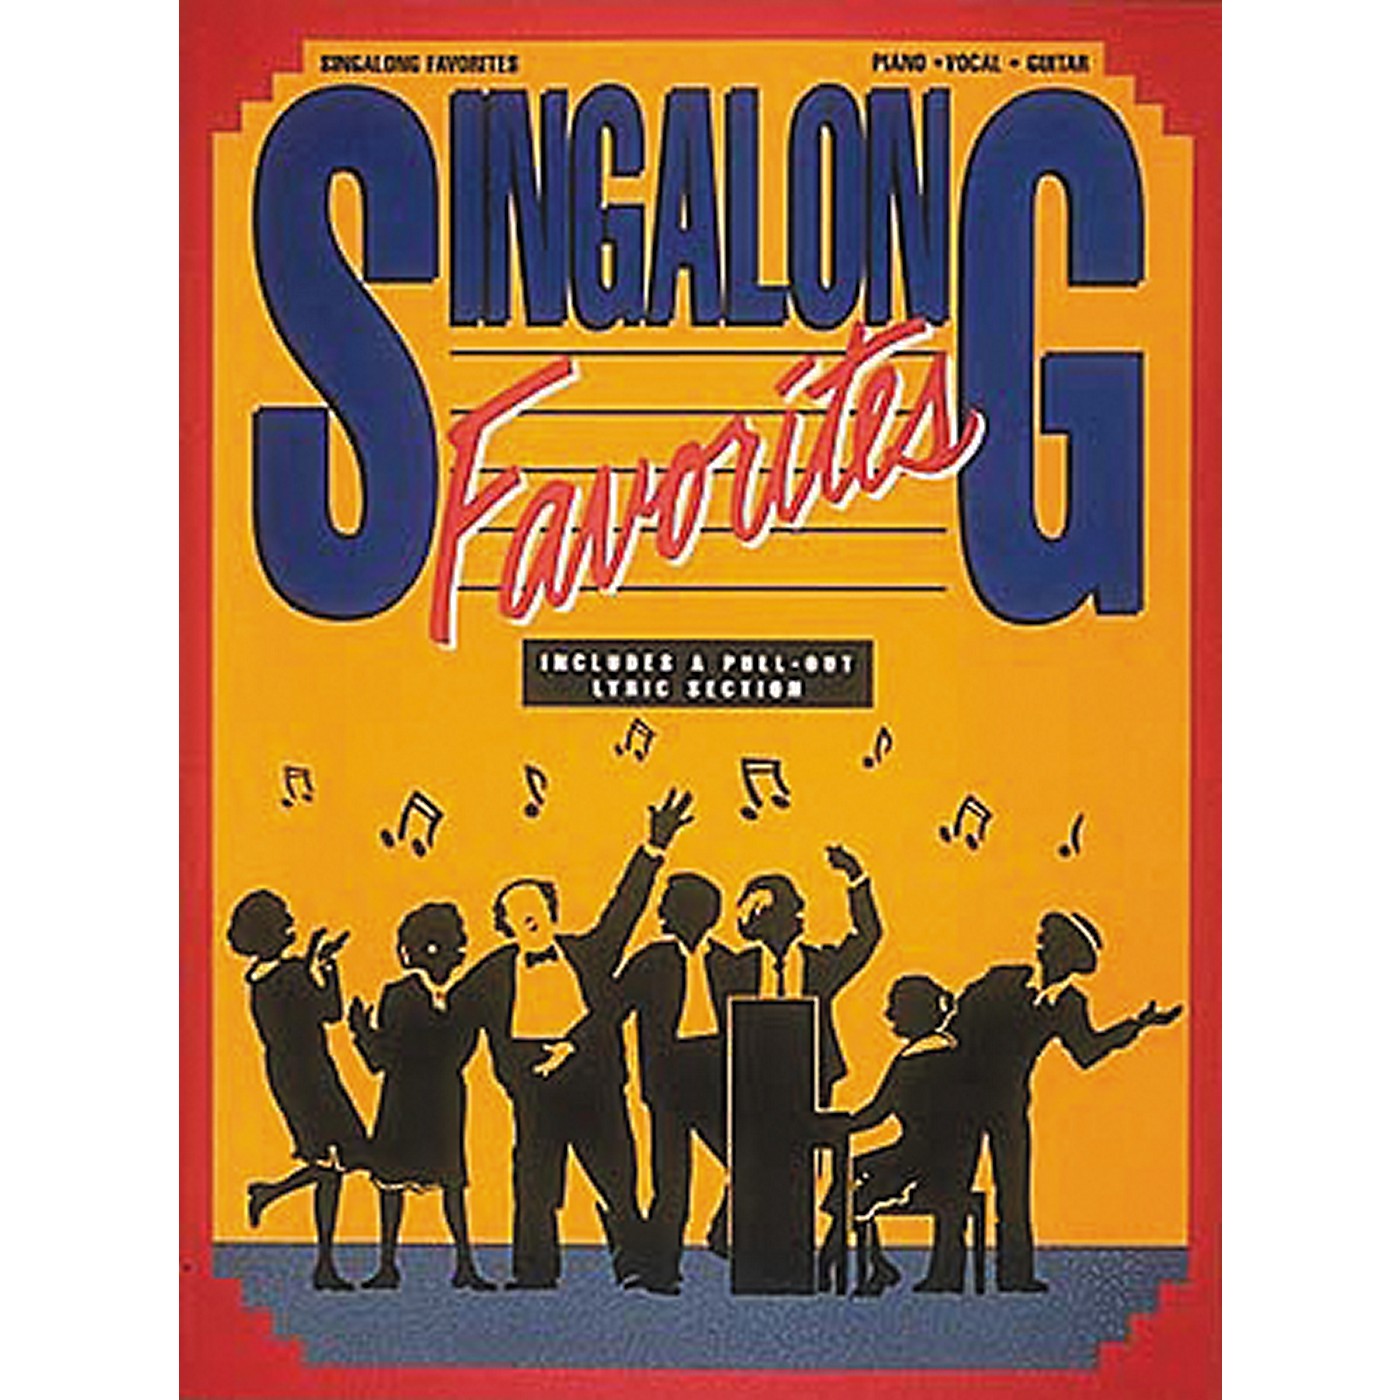 Hal Leonard Singalong Favorites Piano, Vocal, Guitar Songbook thumbnail